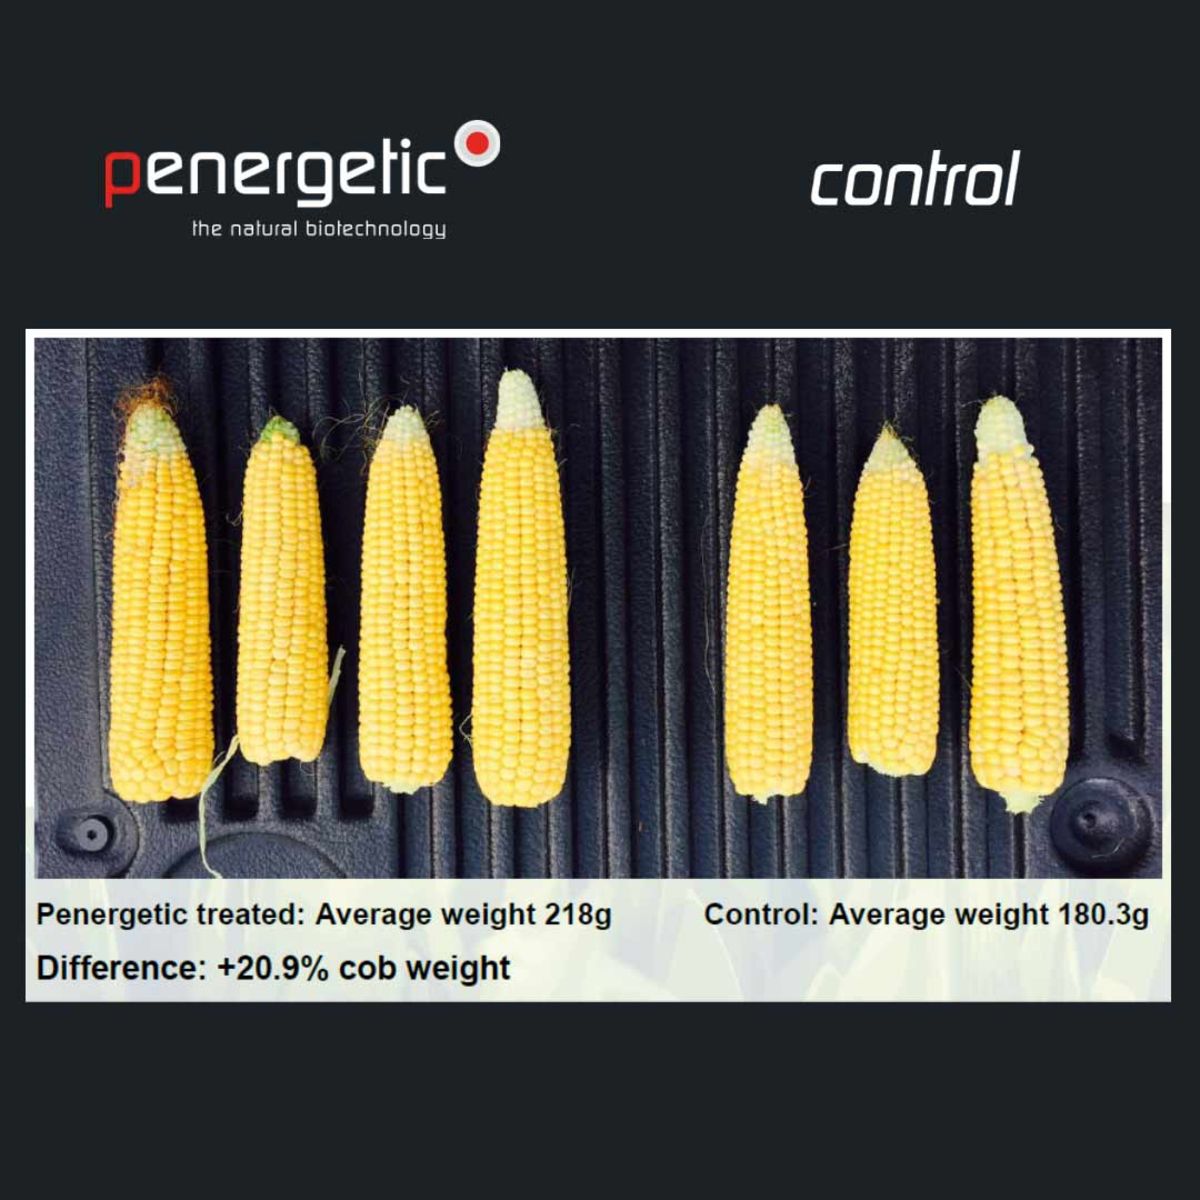 more corn yield